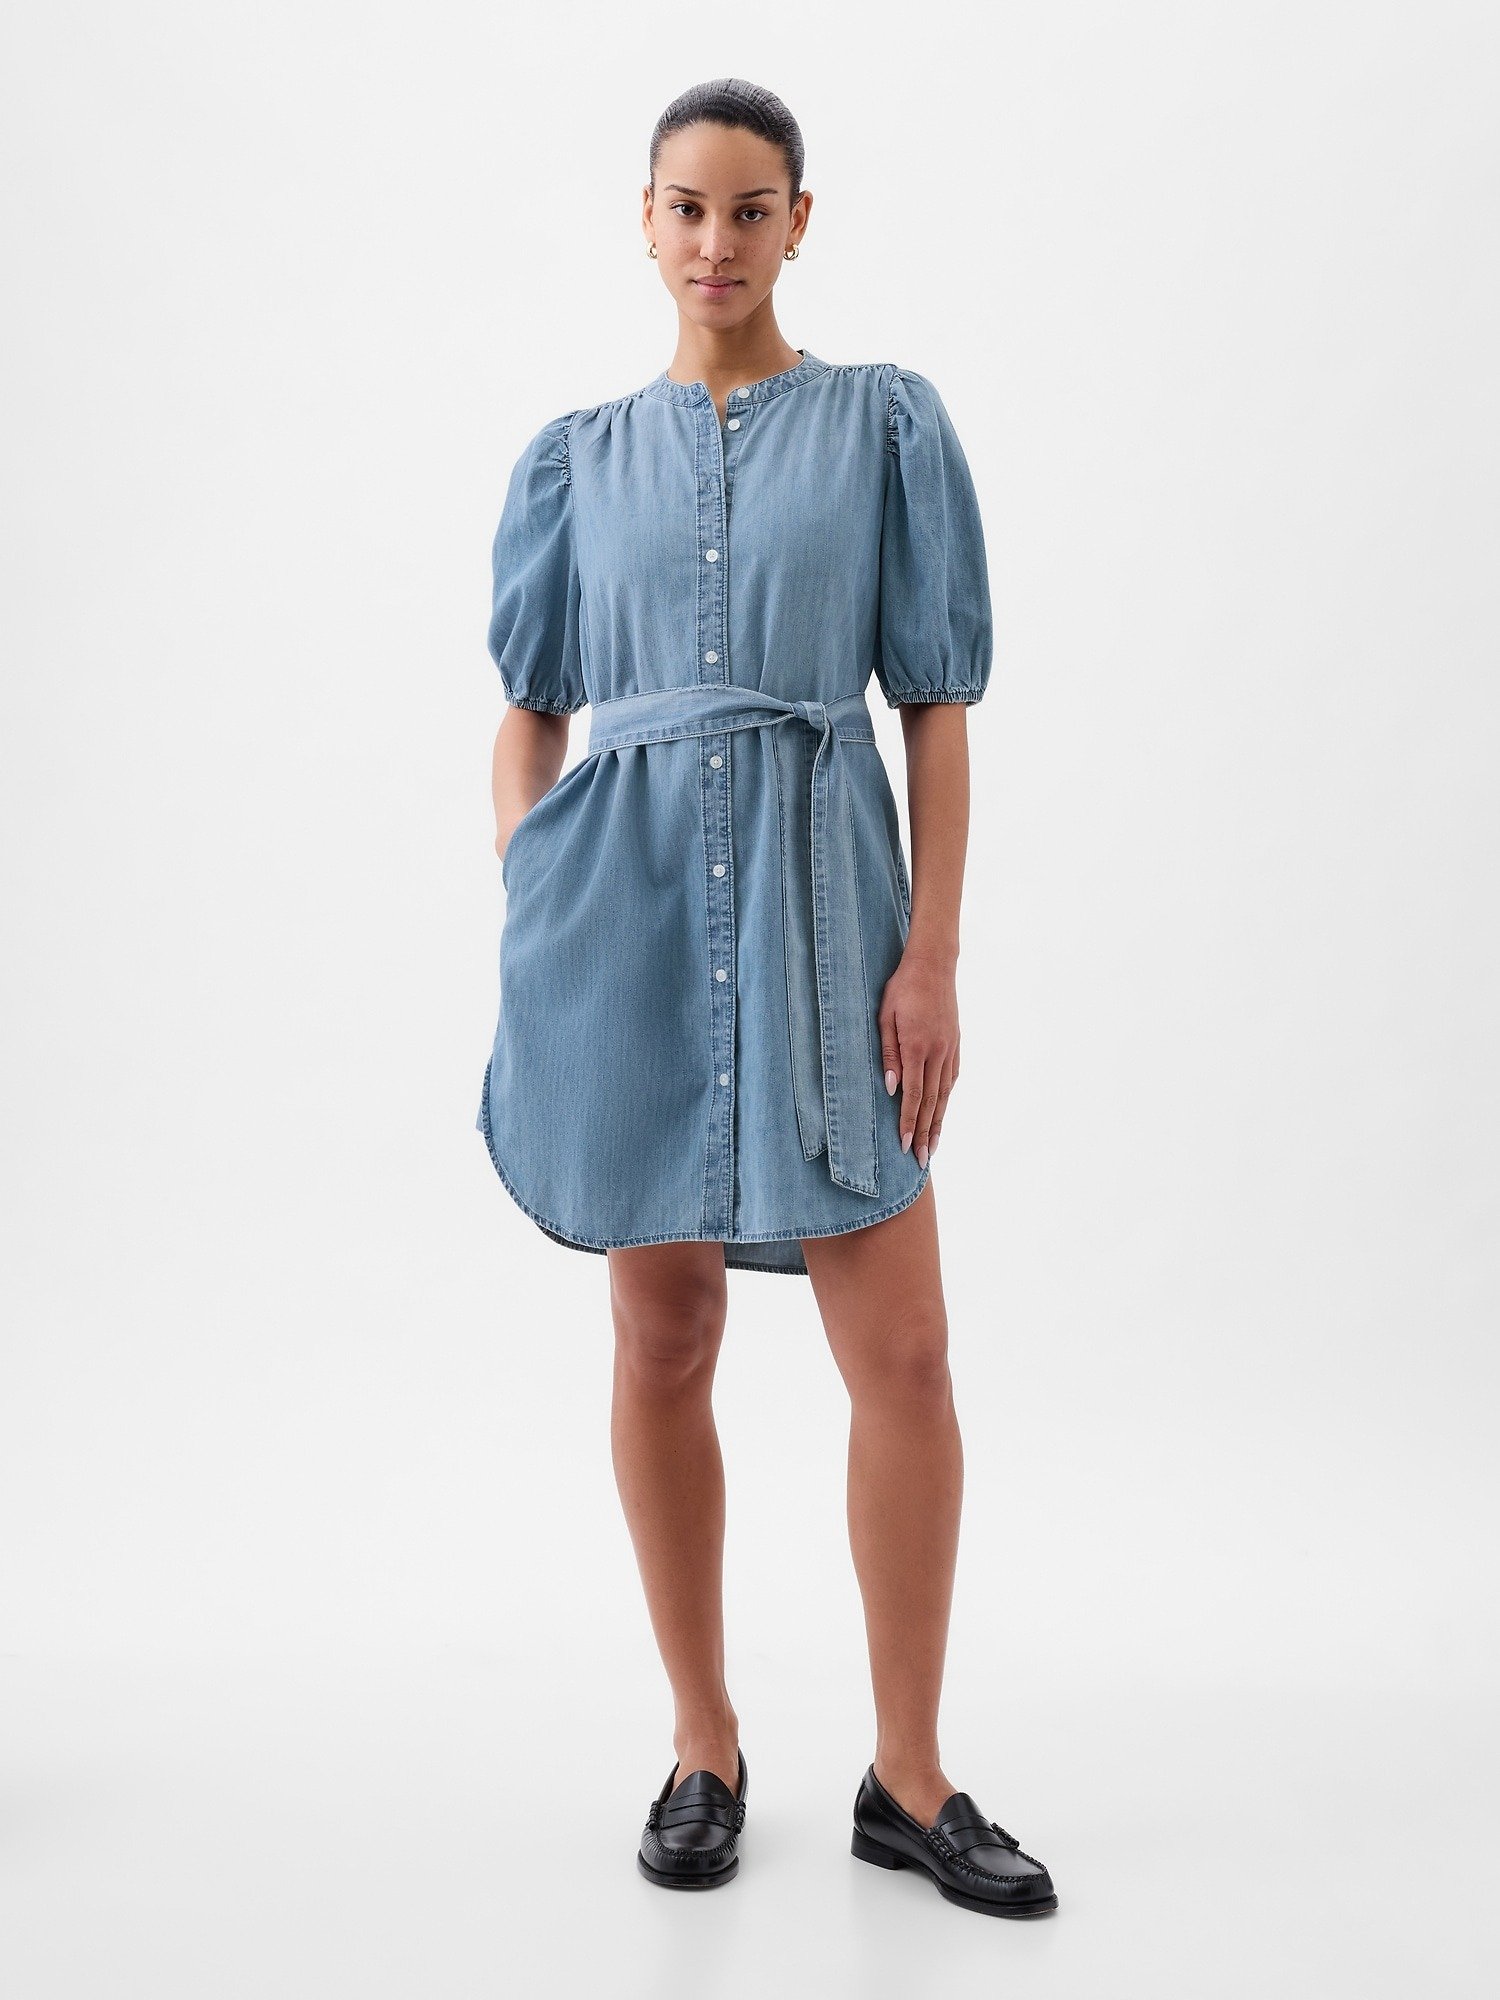 Balon Kol Denim Elbise product image